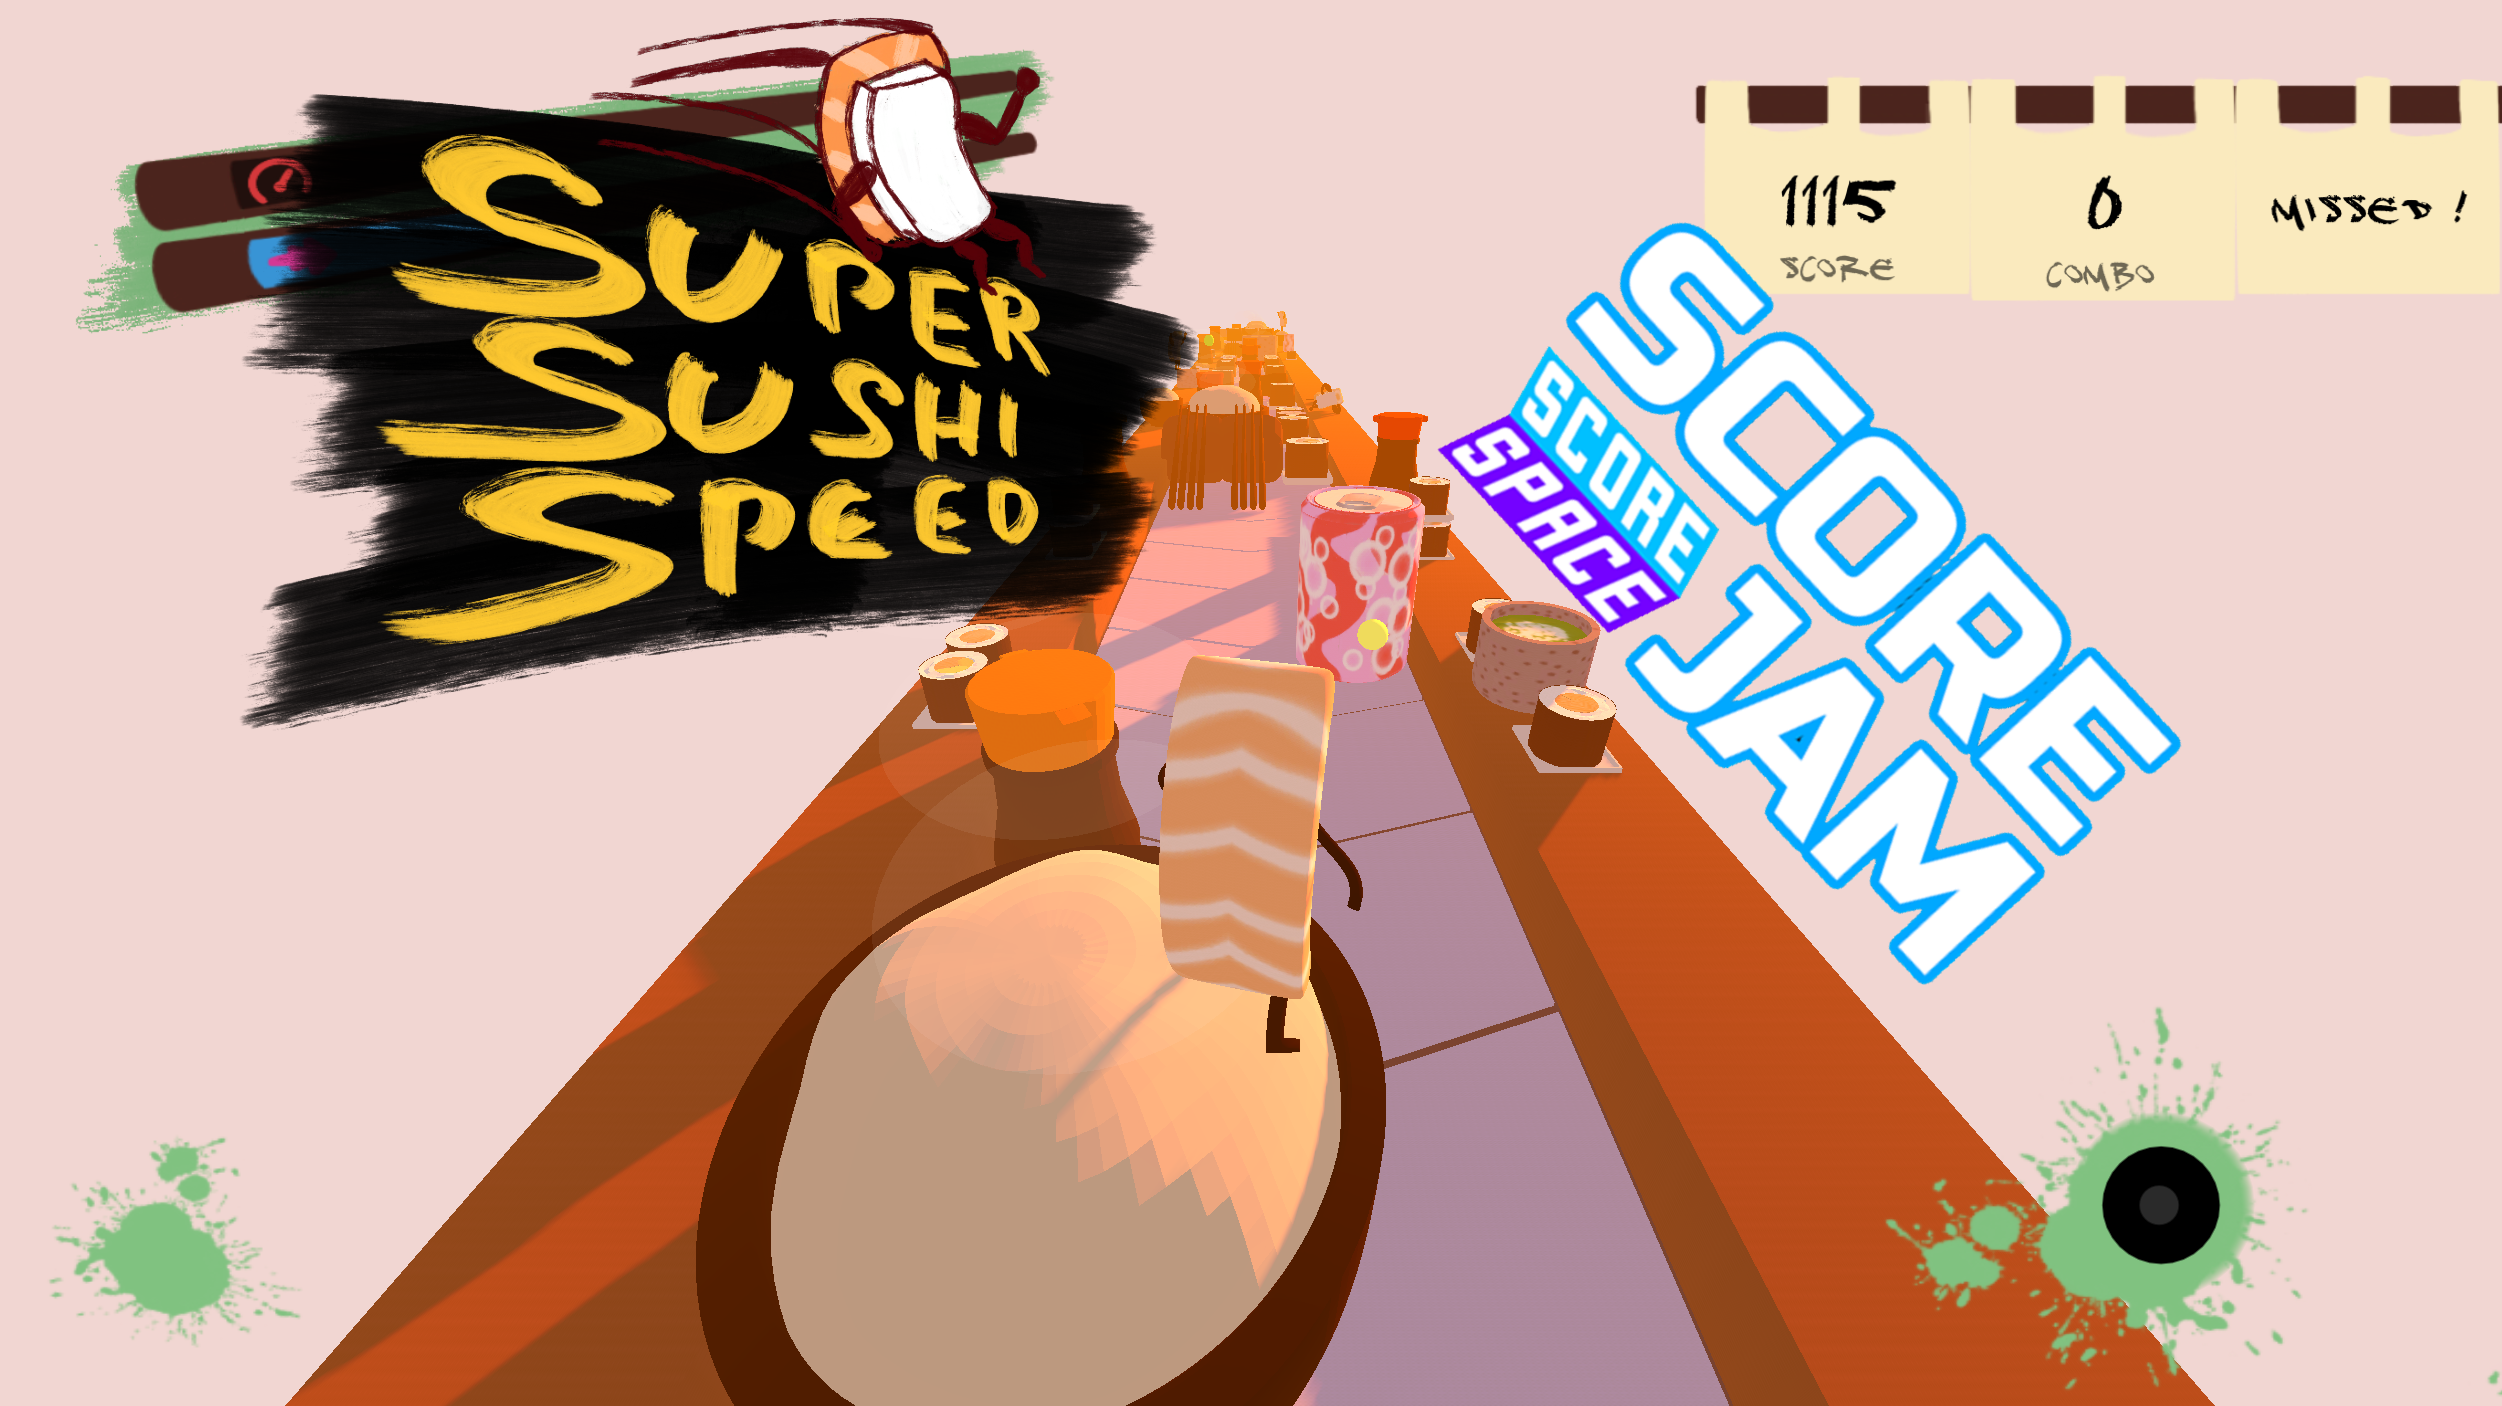 Super Sushi Speed